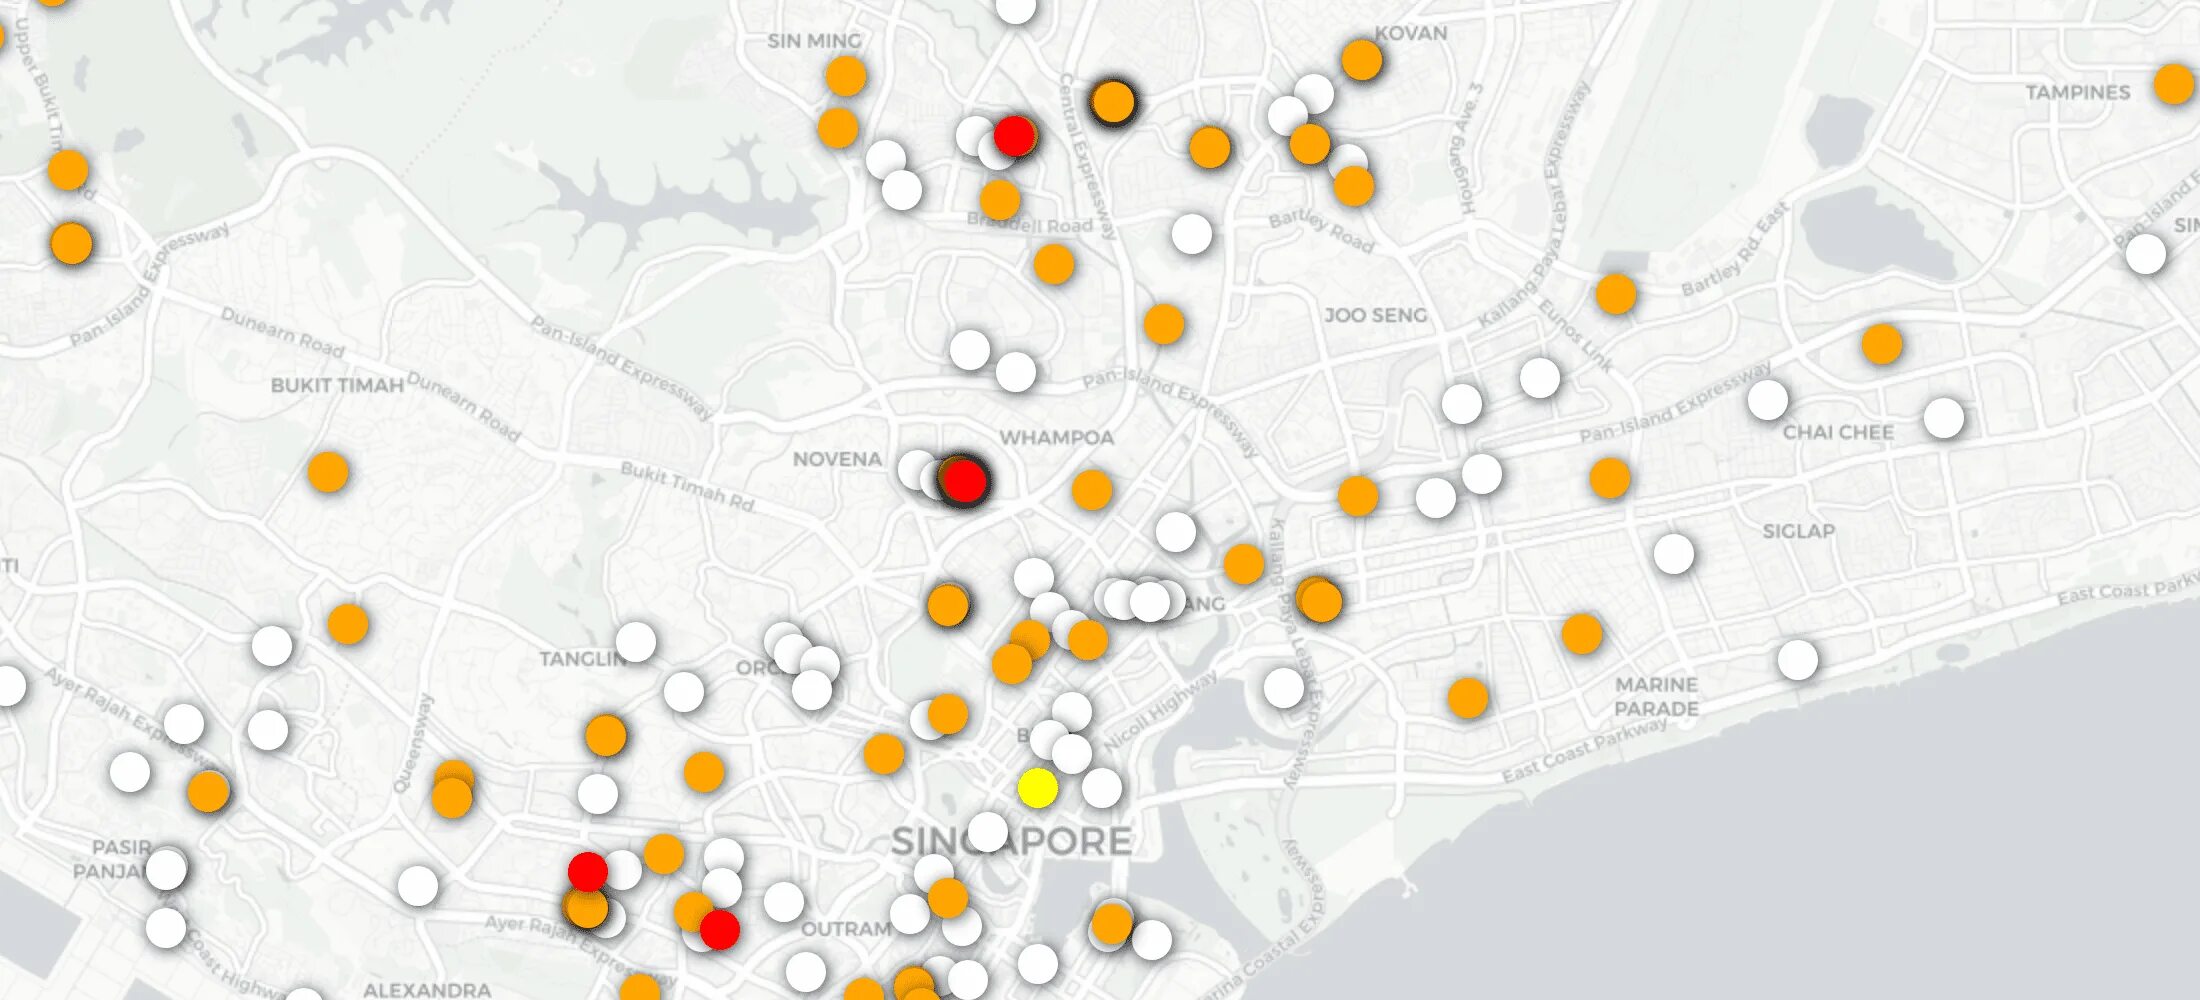 Community map. Кластеризация на карте. Кластеризация ИИ. Сингапур рыбный кластер. Сингапур it кластер.